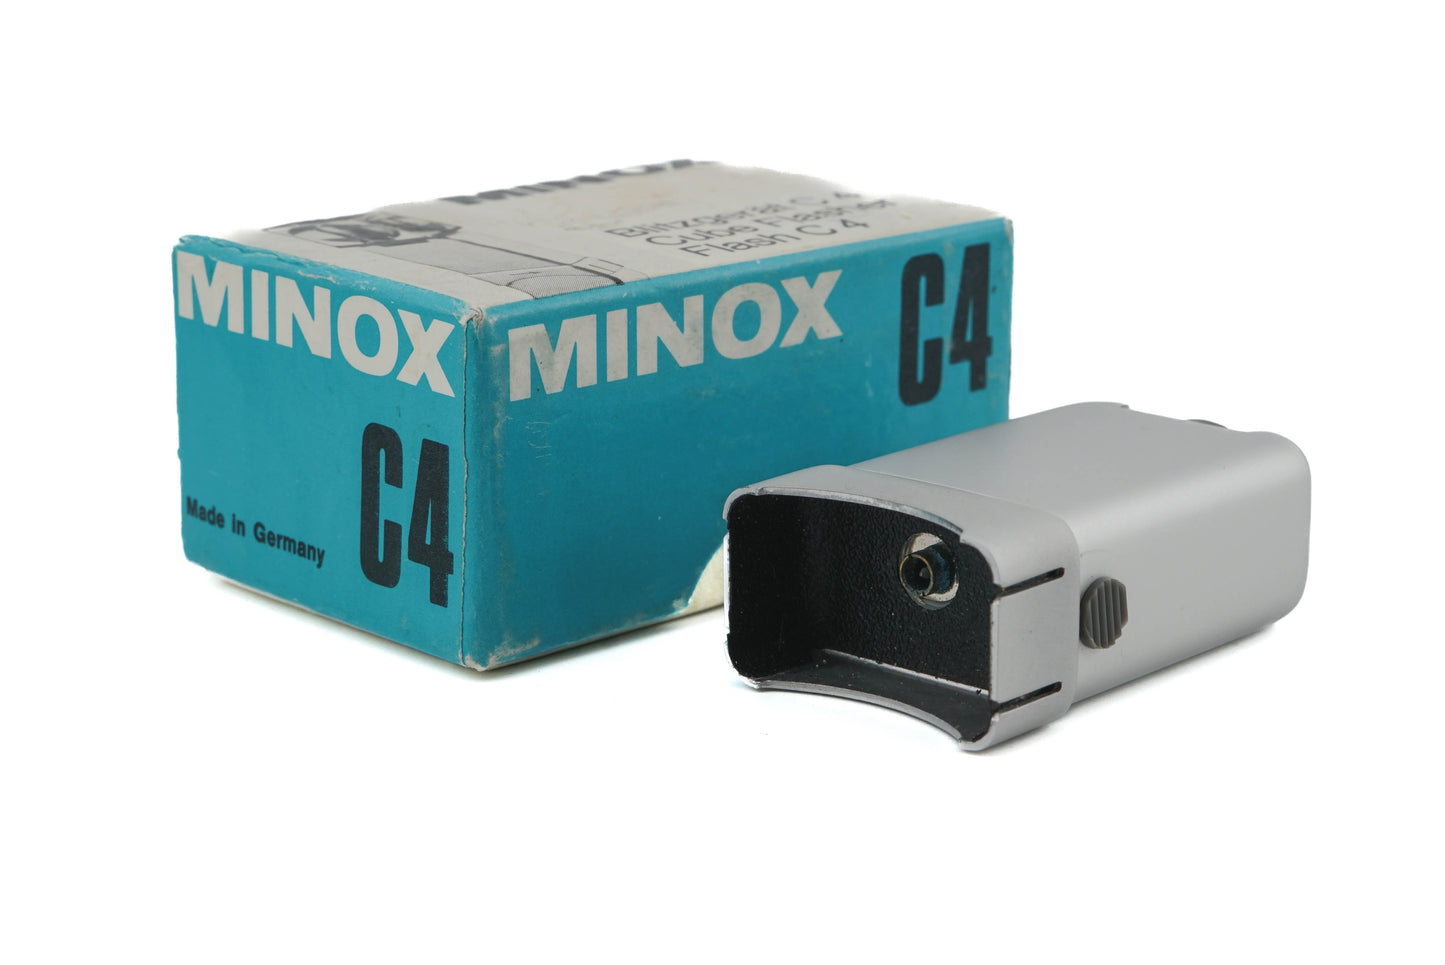 Minox Flash C4